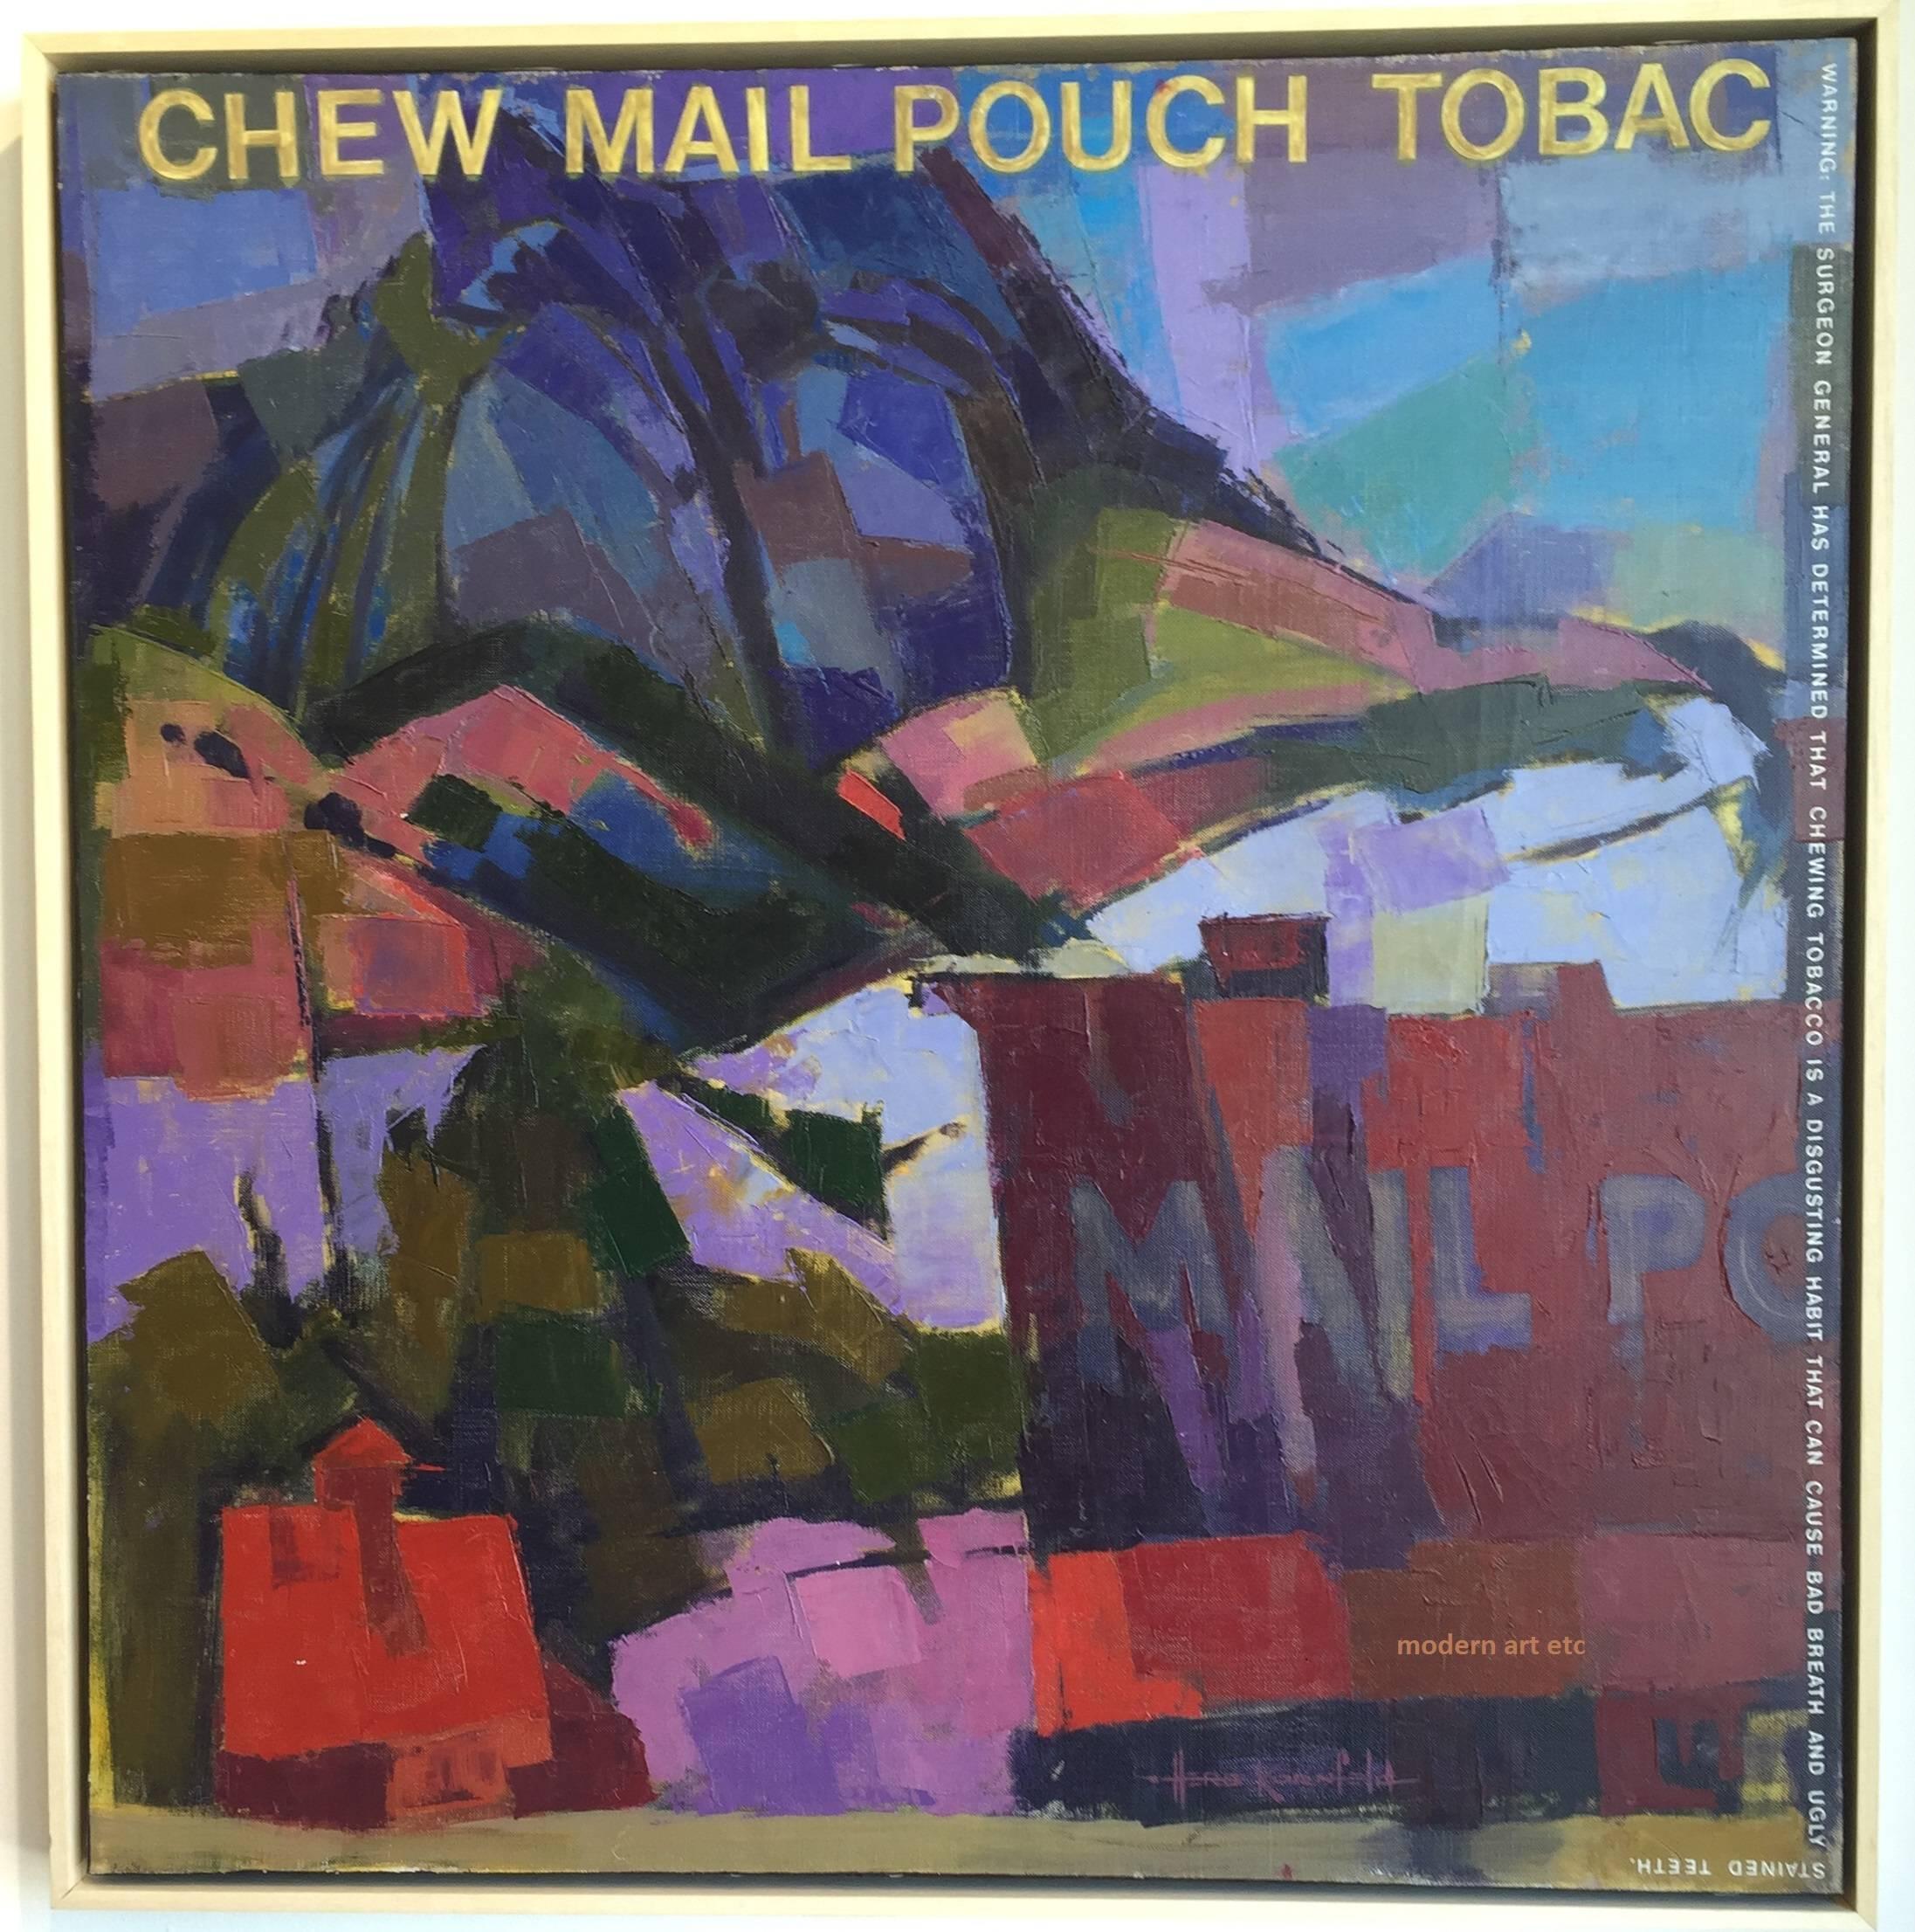 Herbert Kornfeld Landscape Painting - Oil on Canvas - "Mail Pouch Barn - LEGEND", San Luis obispo, California, 1991